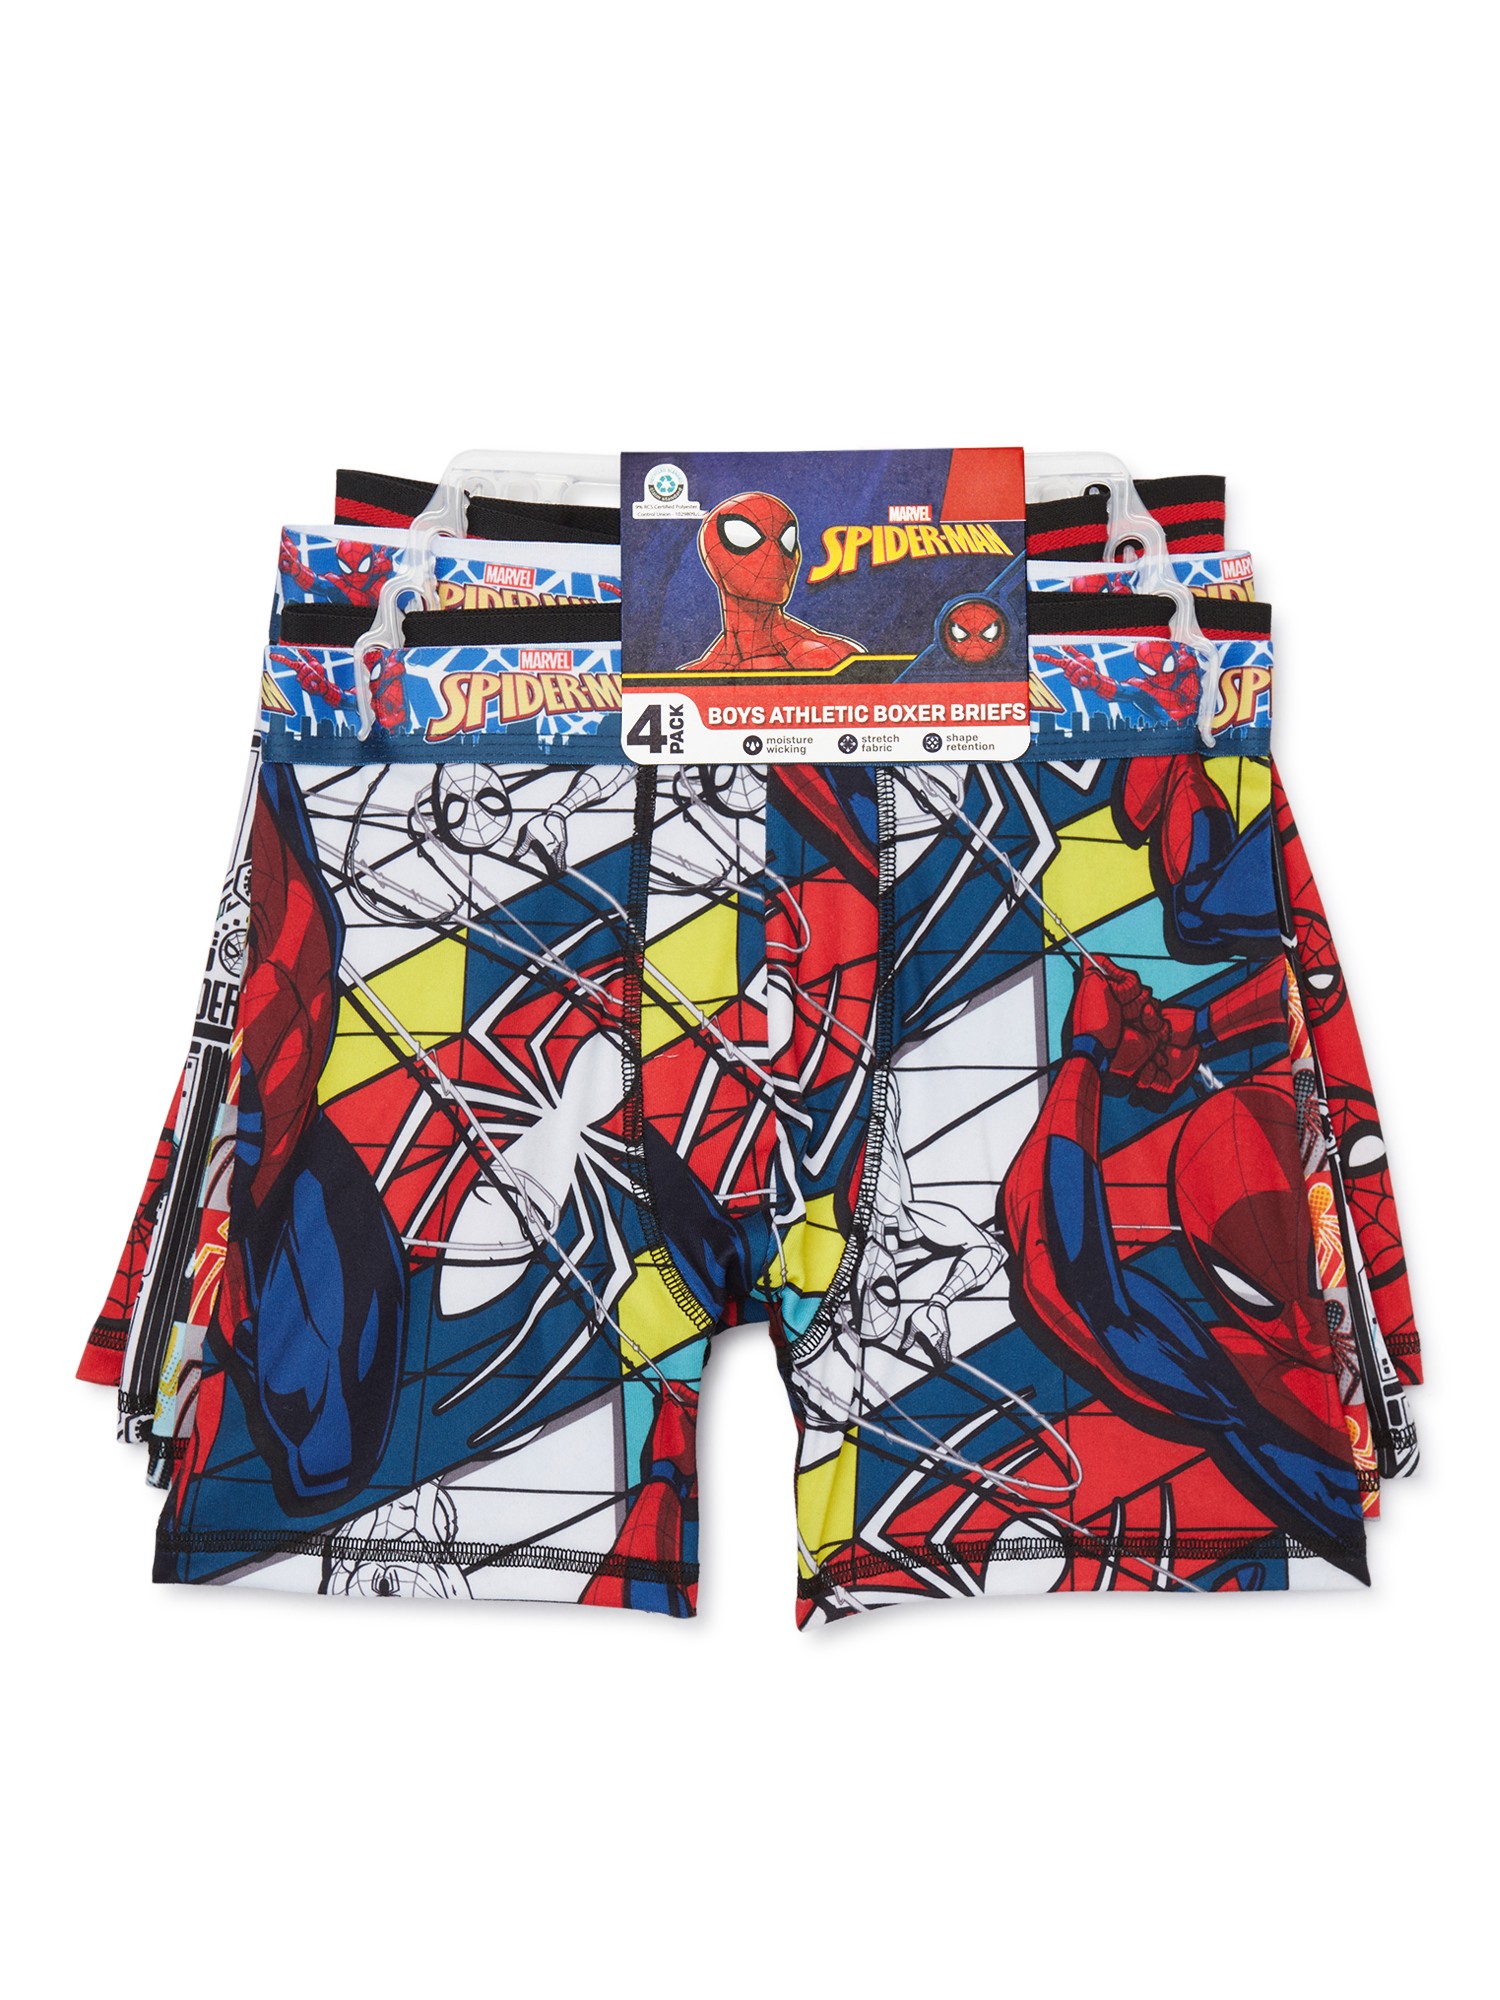 Super Mario Bros Boys All Over Print Boxer Briefs Underwear, 4-Pack, Sizes  XS-XL 